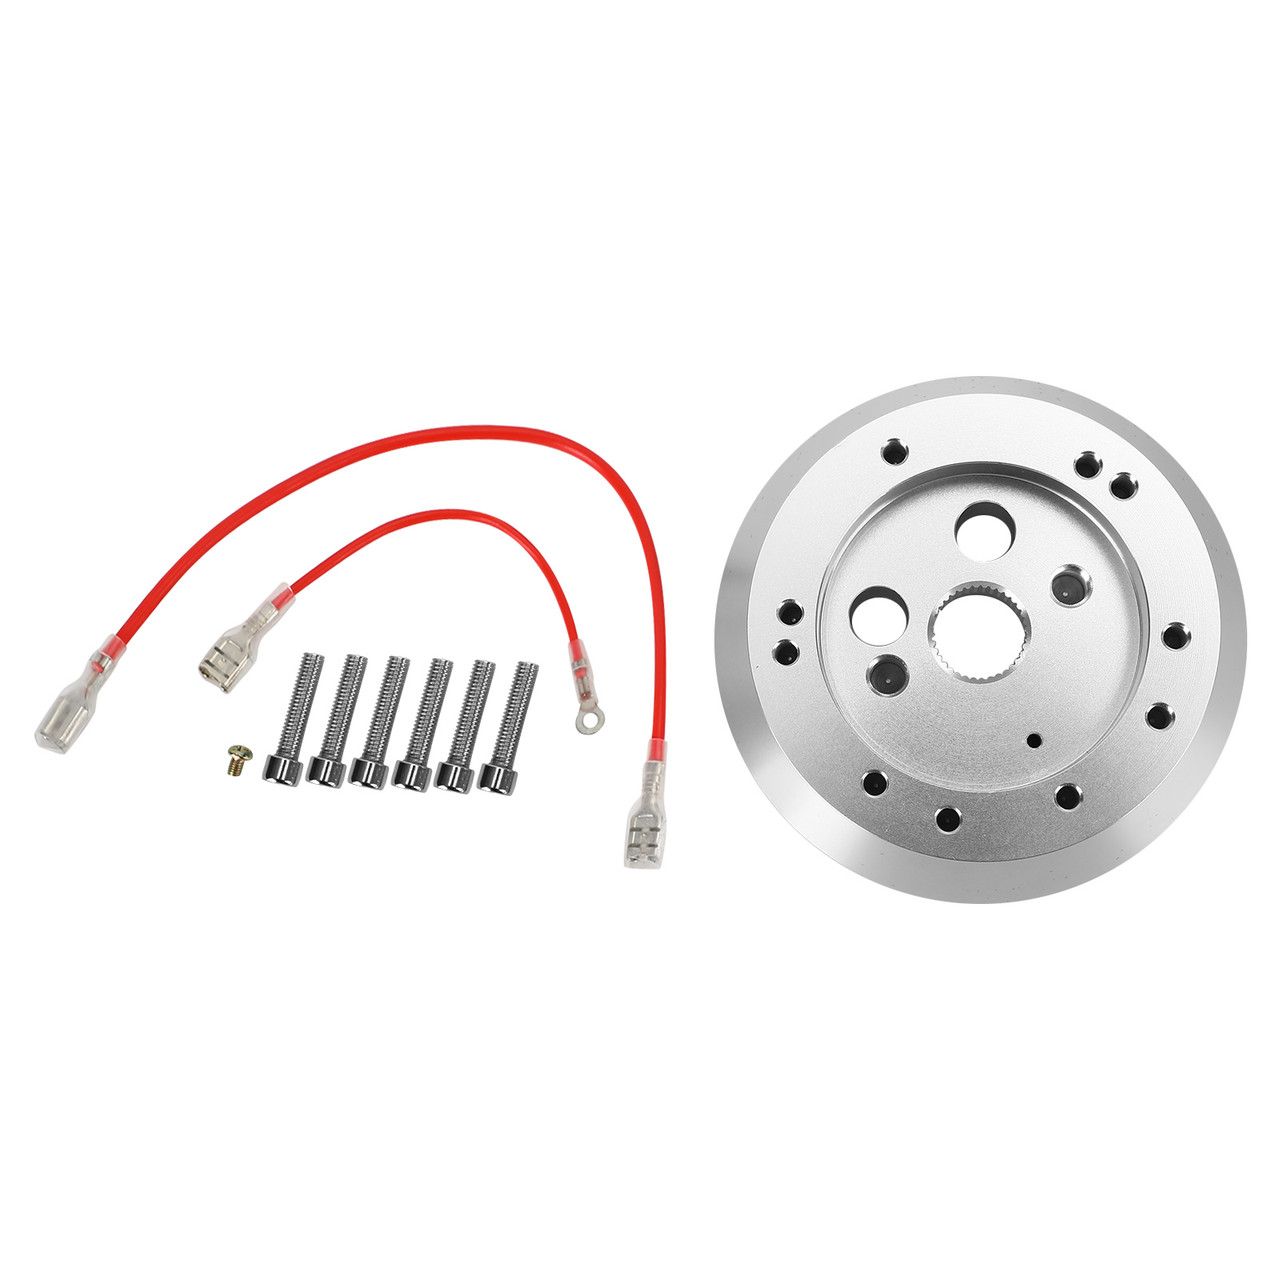 5 & 6 Hole Steering Wheel Short Hub Adapter Kit Fit for OLDSMOBILE All Models 69-93 Silver